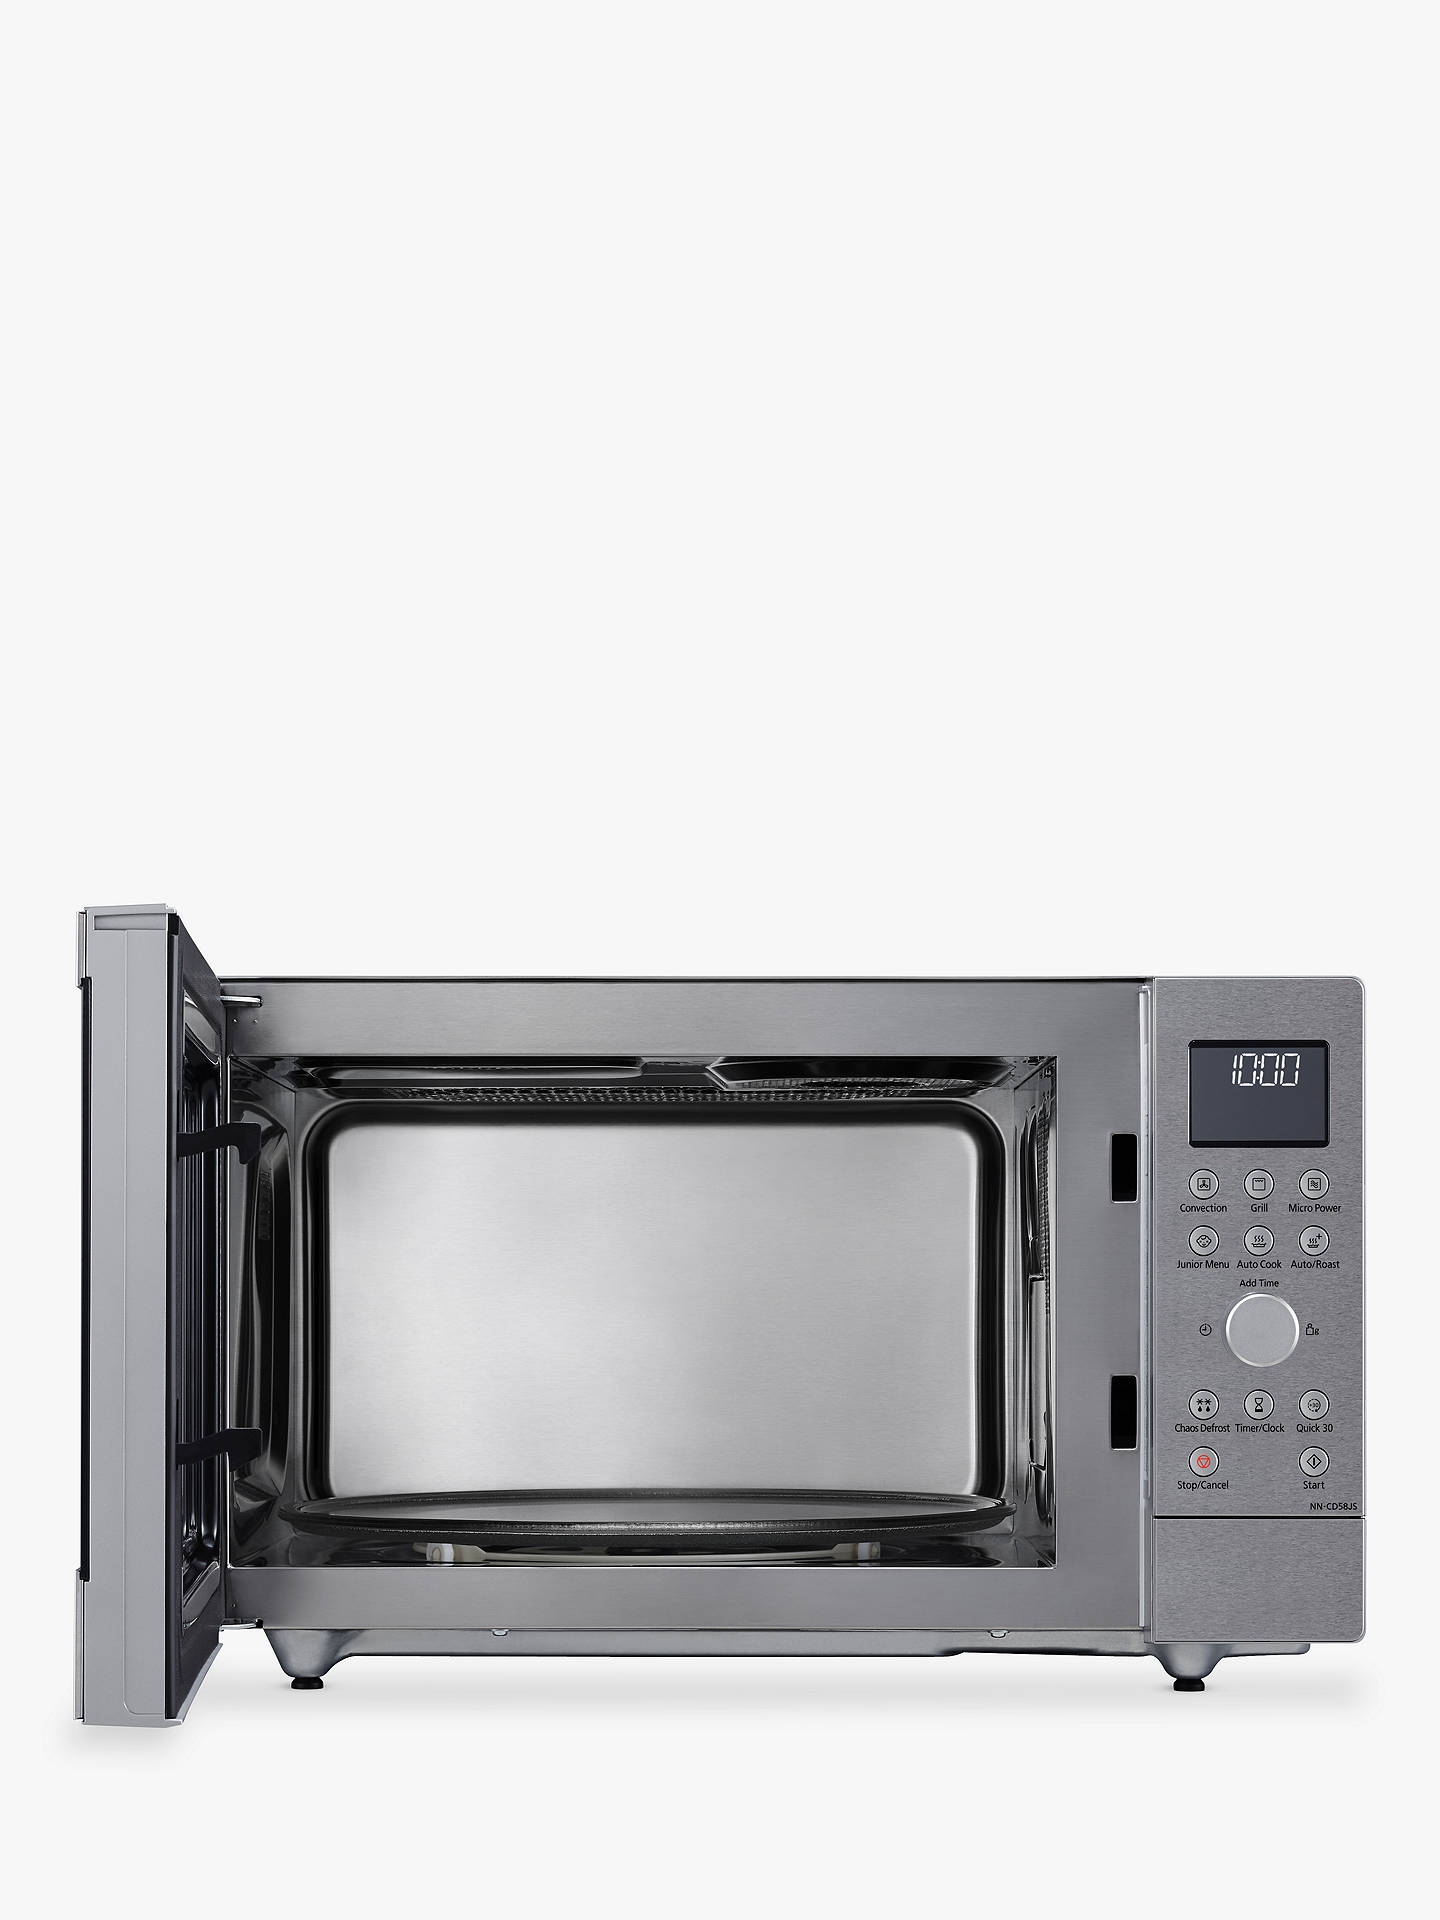 Microwave Oven With Stainless Steel Interior buy panasonic nn cd58jsbpq 27l slimline combination microwave oven stainless steel online at johnlewis